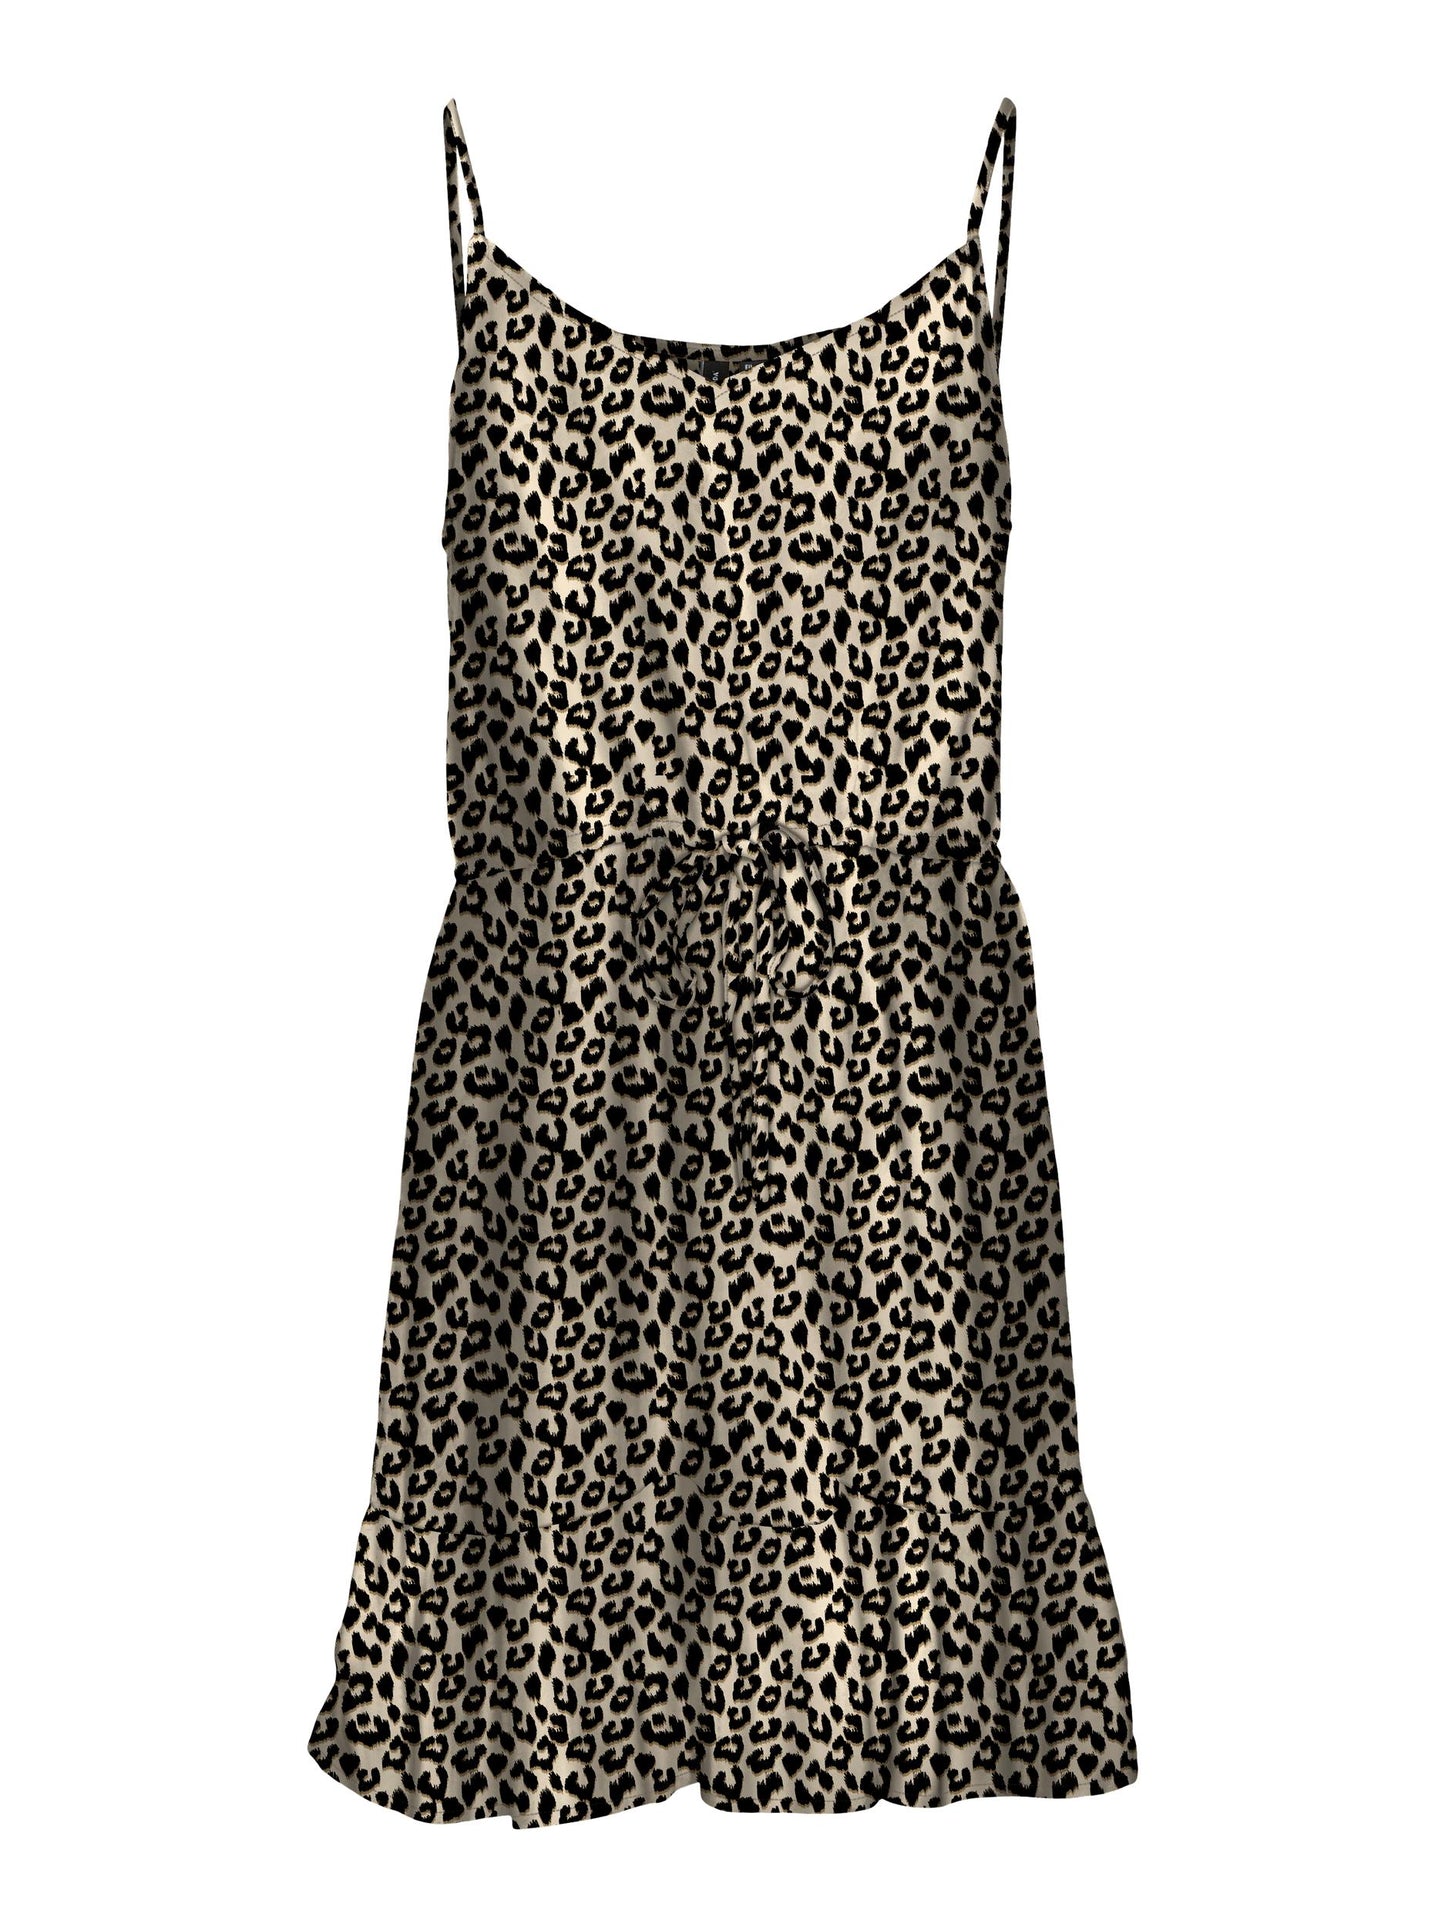 
                  
                    VERO MODA Easy Leopard Print Strappy Mini Sun Dress in Black & Beige - One Nation Clothing
                  
                